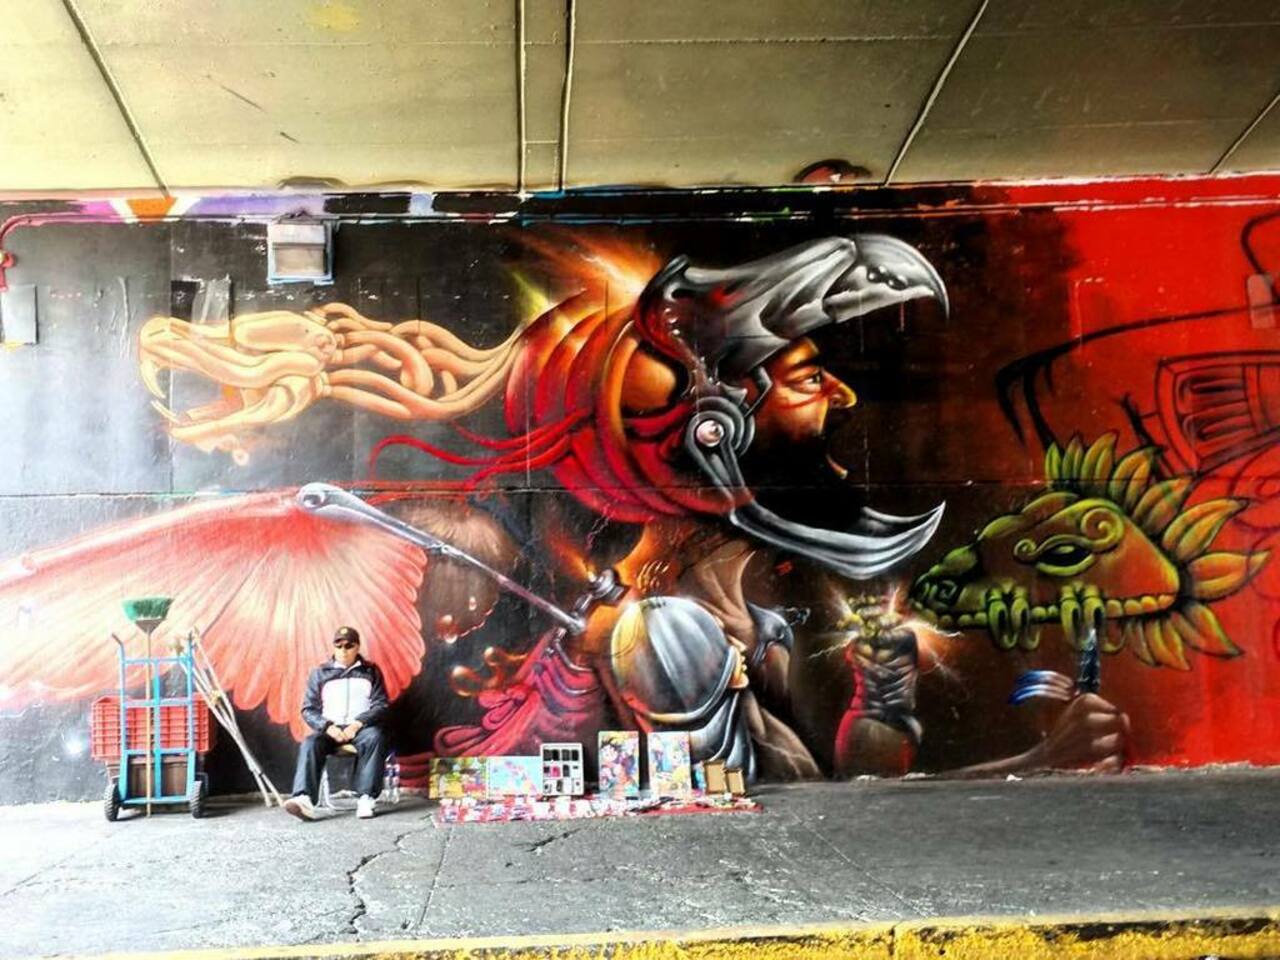 #streetart #arteurbano #urbanart #urban #art #mexico #cdmx #mexicodf #mural #graffiti #streetartmexico #urbanwalls … http://t.co/GkPai1dBiR